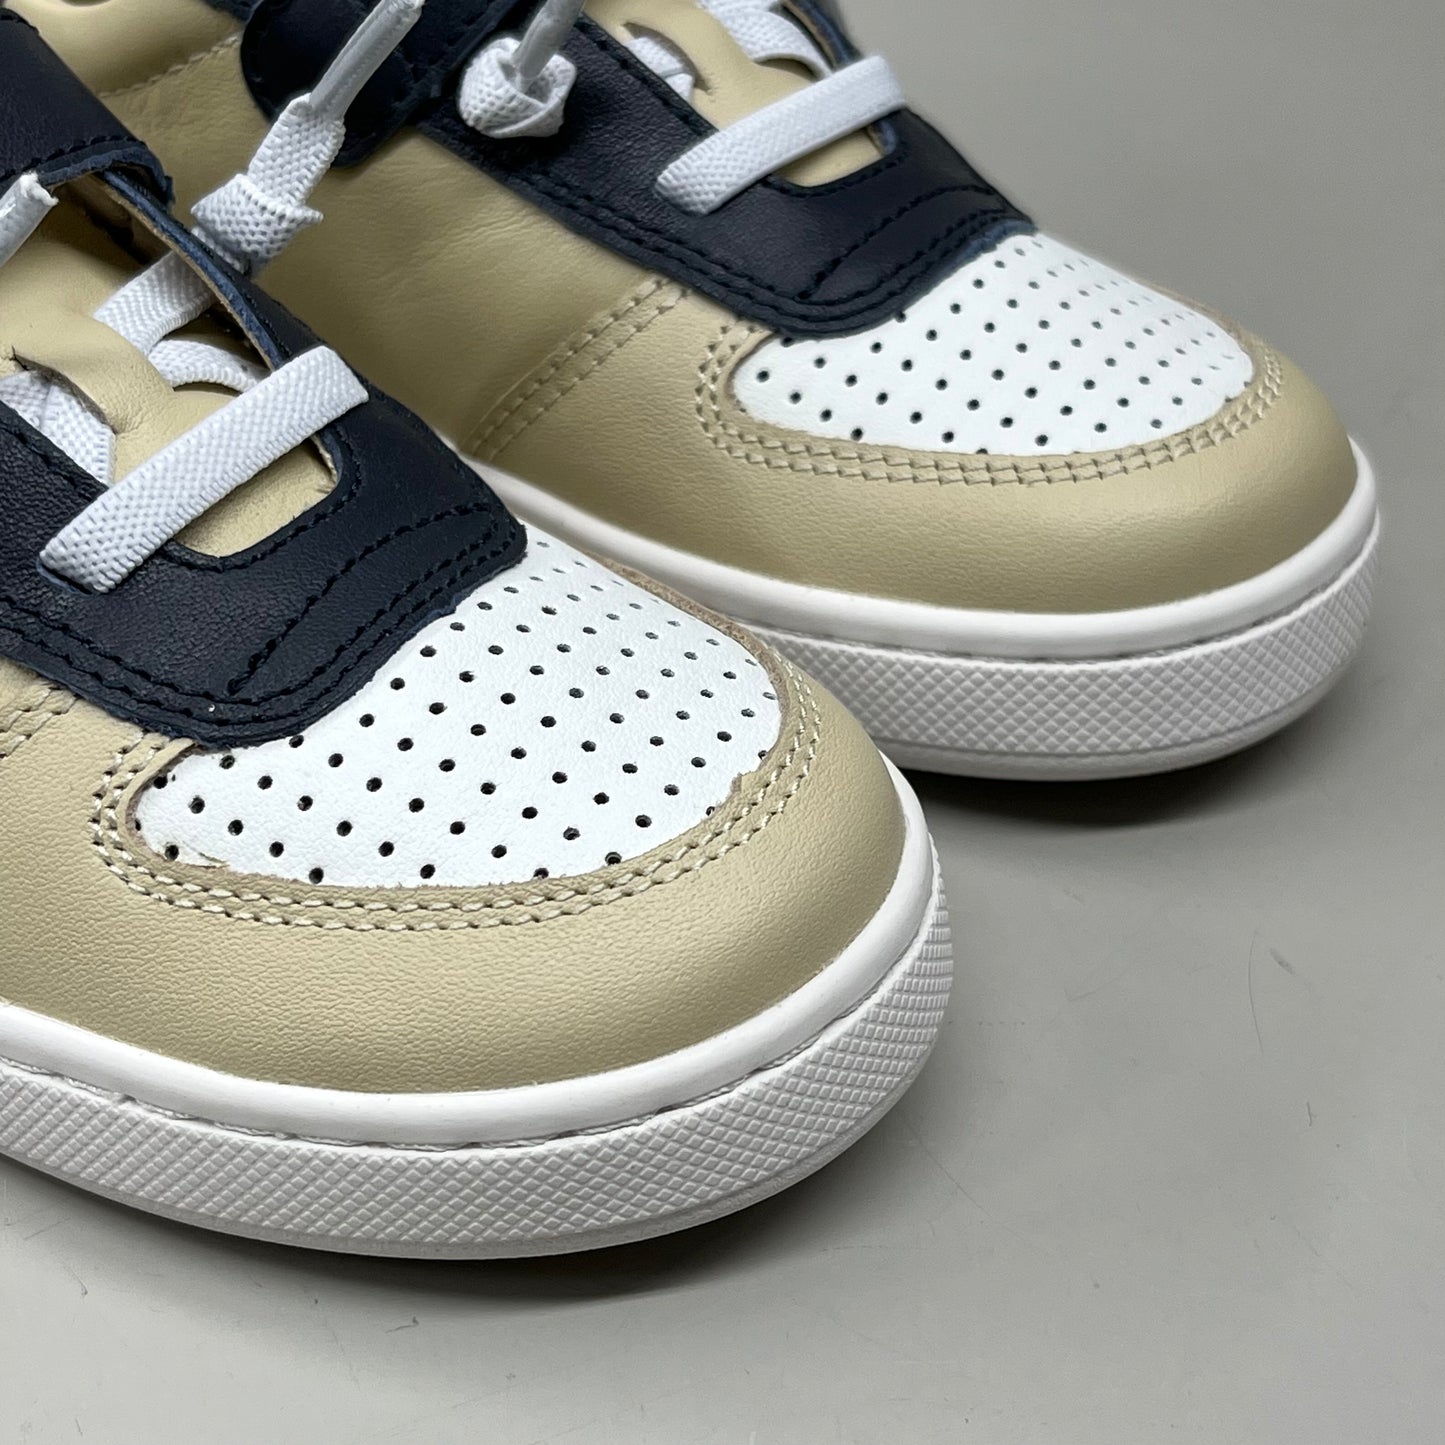 OLD SOLES Runsky Sneakers Leather Shoe Kid’s Sz 29 US 12 Cream/Navy/Snow #6135